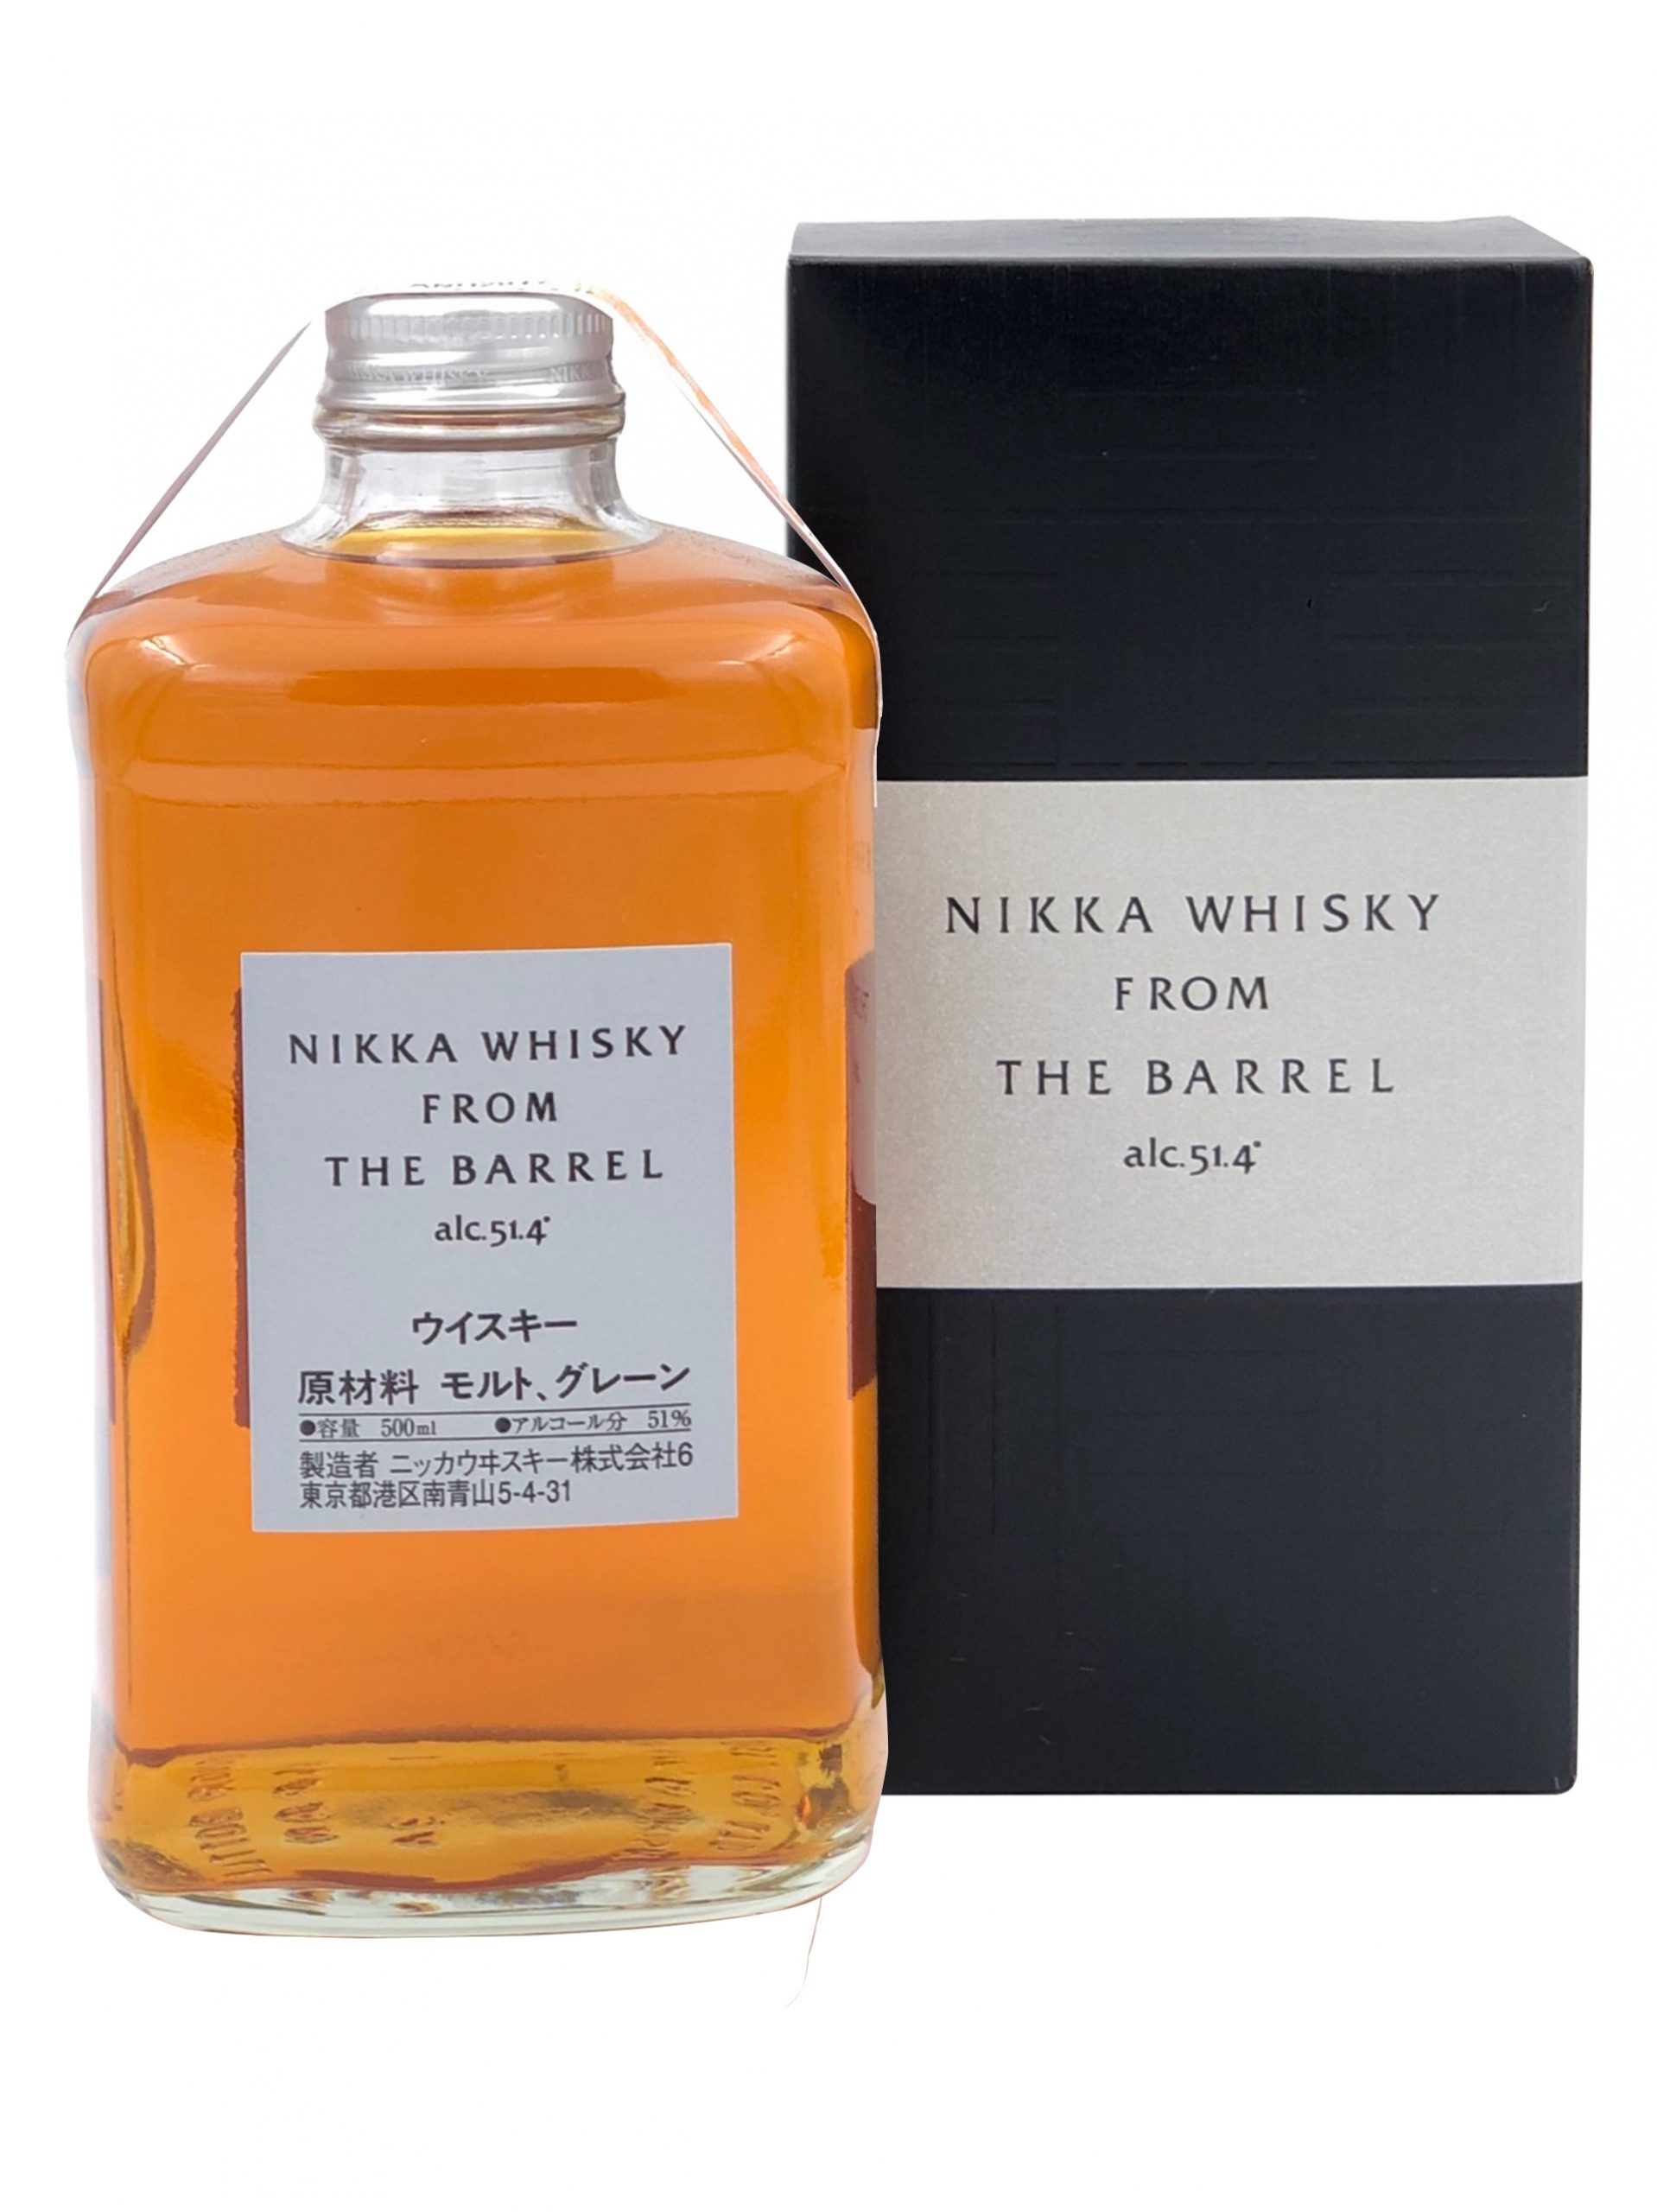 Nikka Whisky From the Barrel Nikka